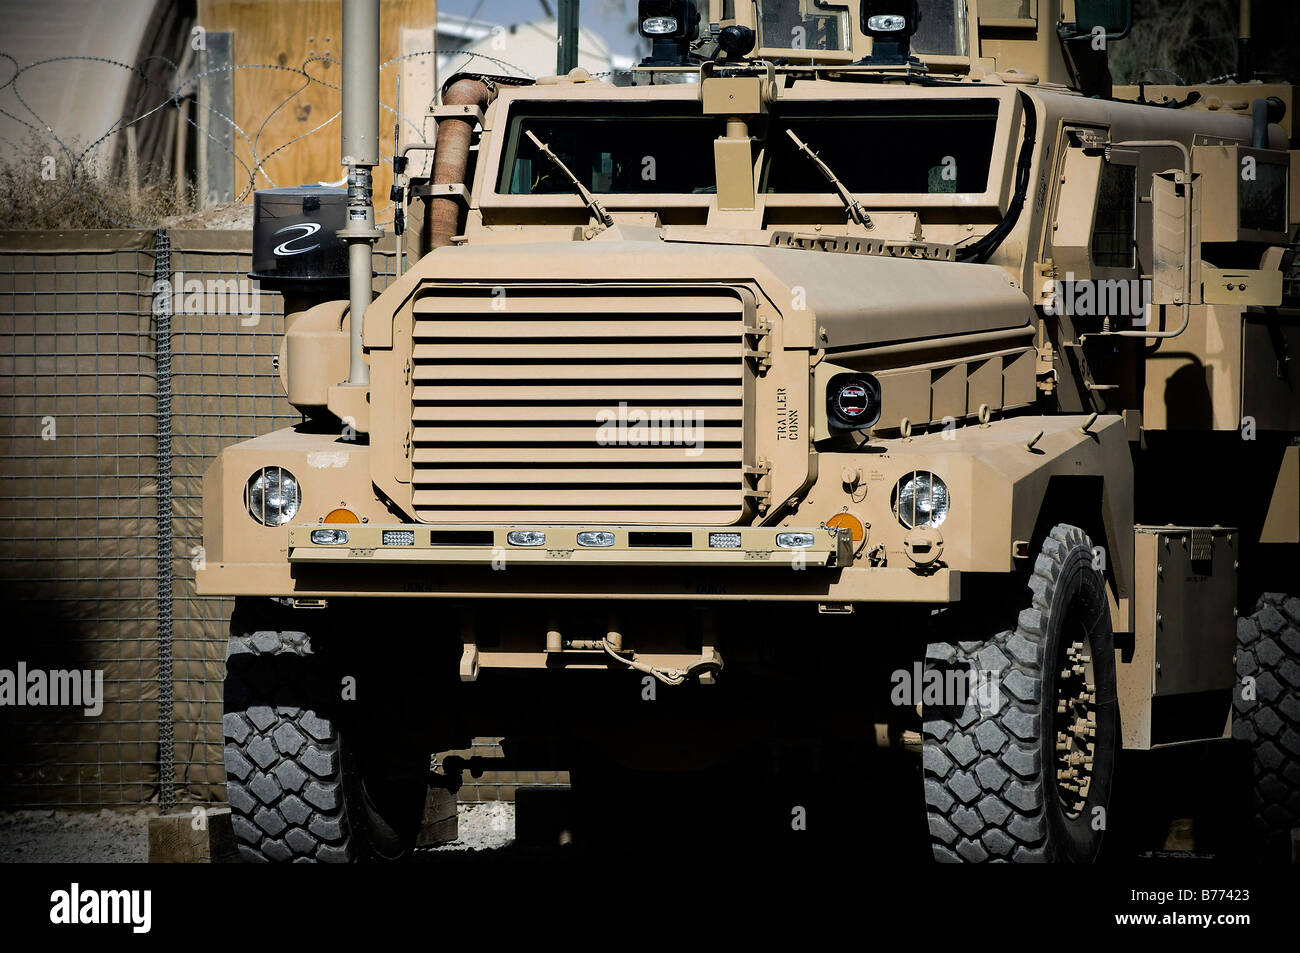 A mine-resistant, ambush-protected vehicle. Stock Photo